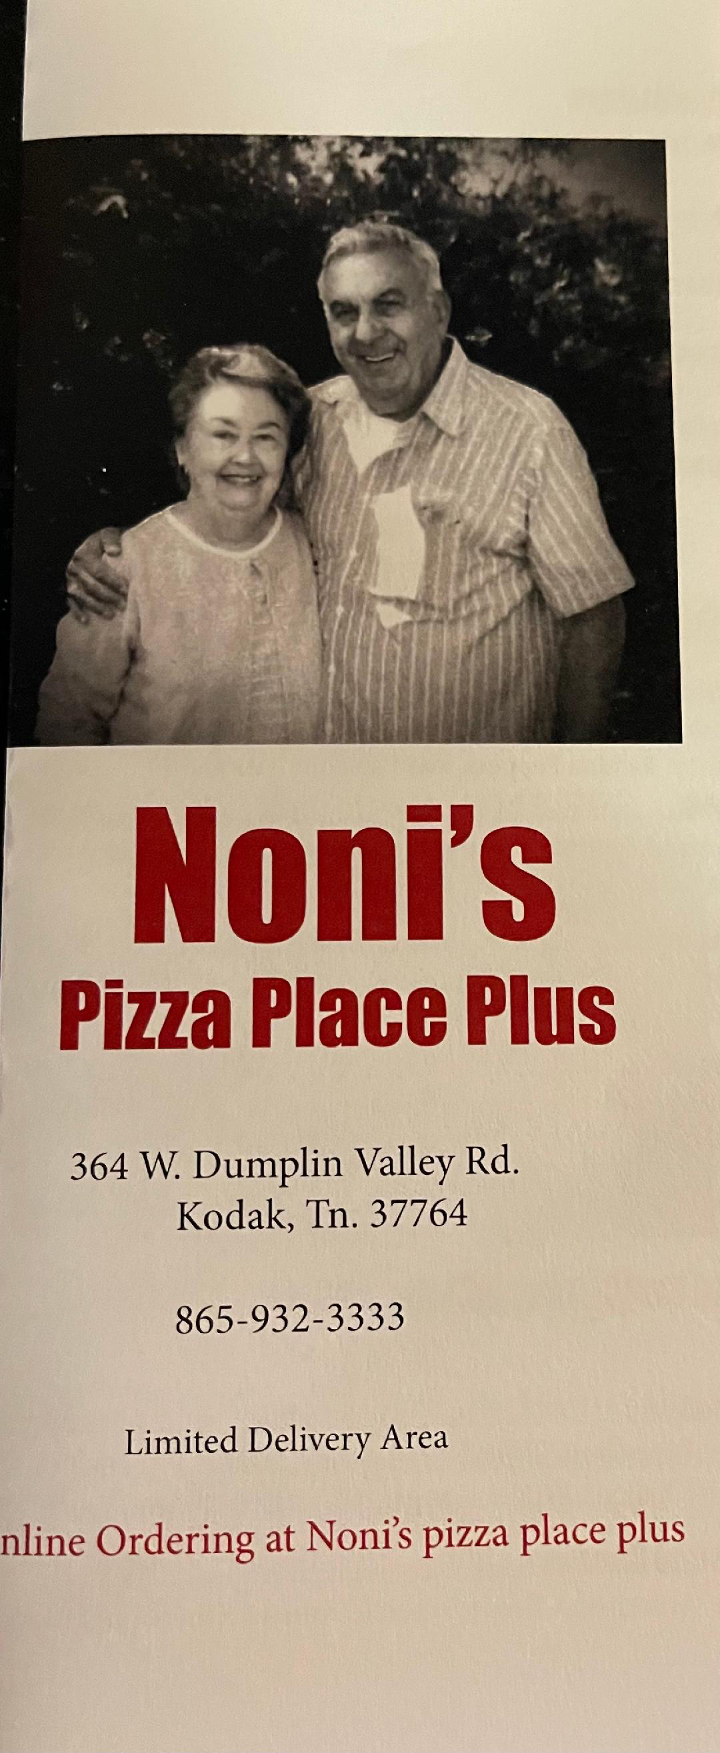 Noni's Pizza Place Plus 364 W Dumplin Valley Road